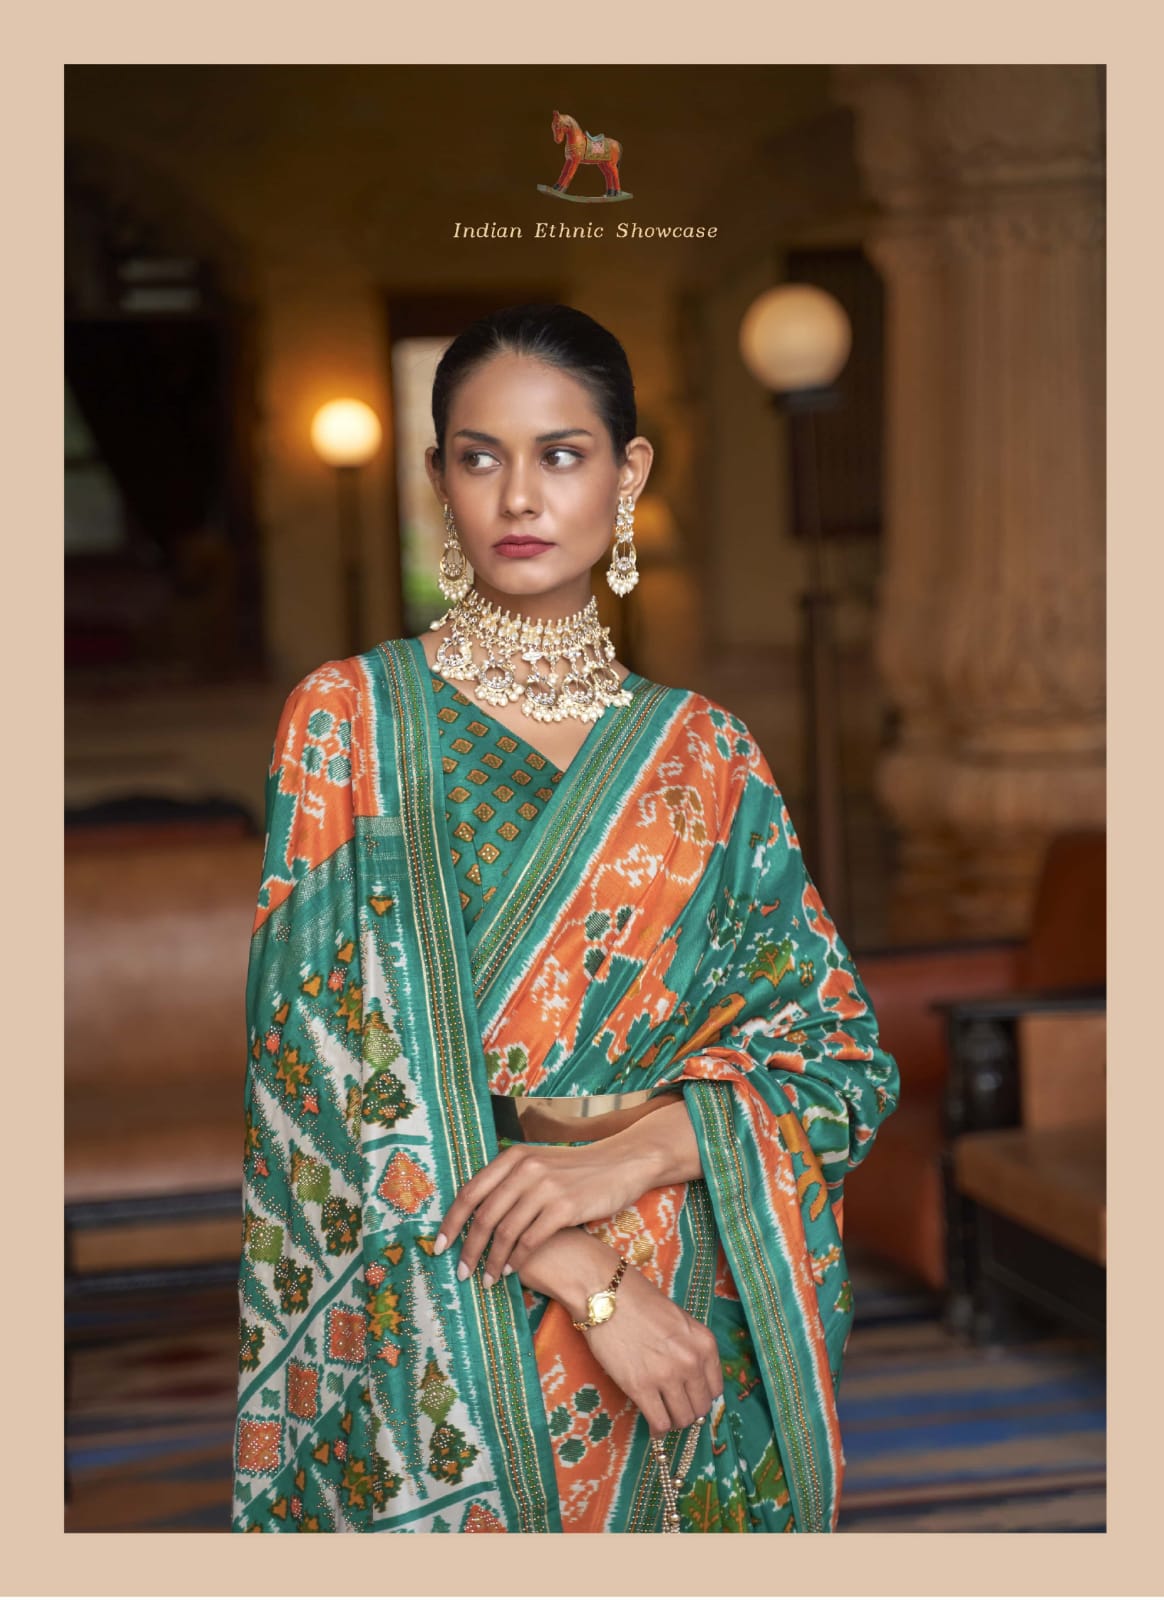 Rewaa Heritage Pure Designer Silk Patola Saree Anant Tex Exports Private Limited